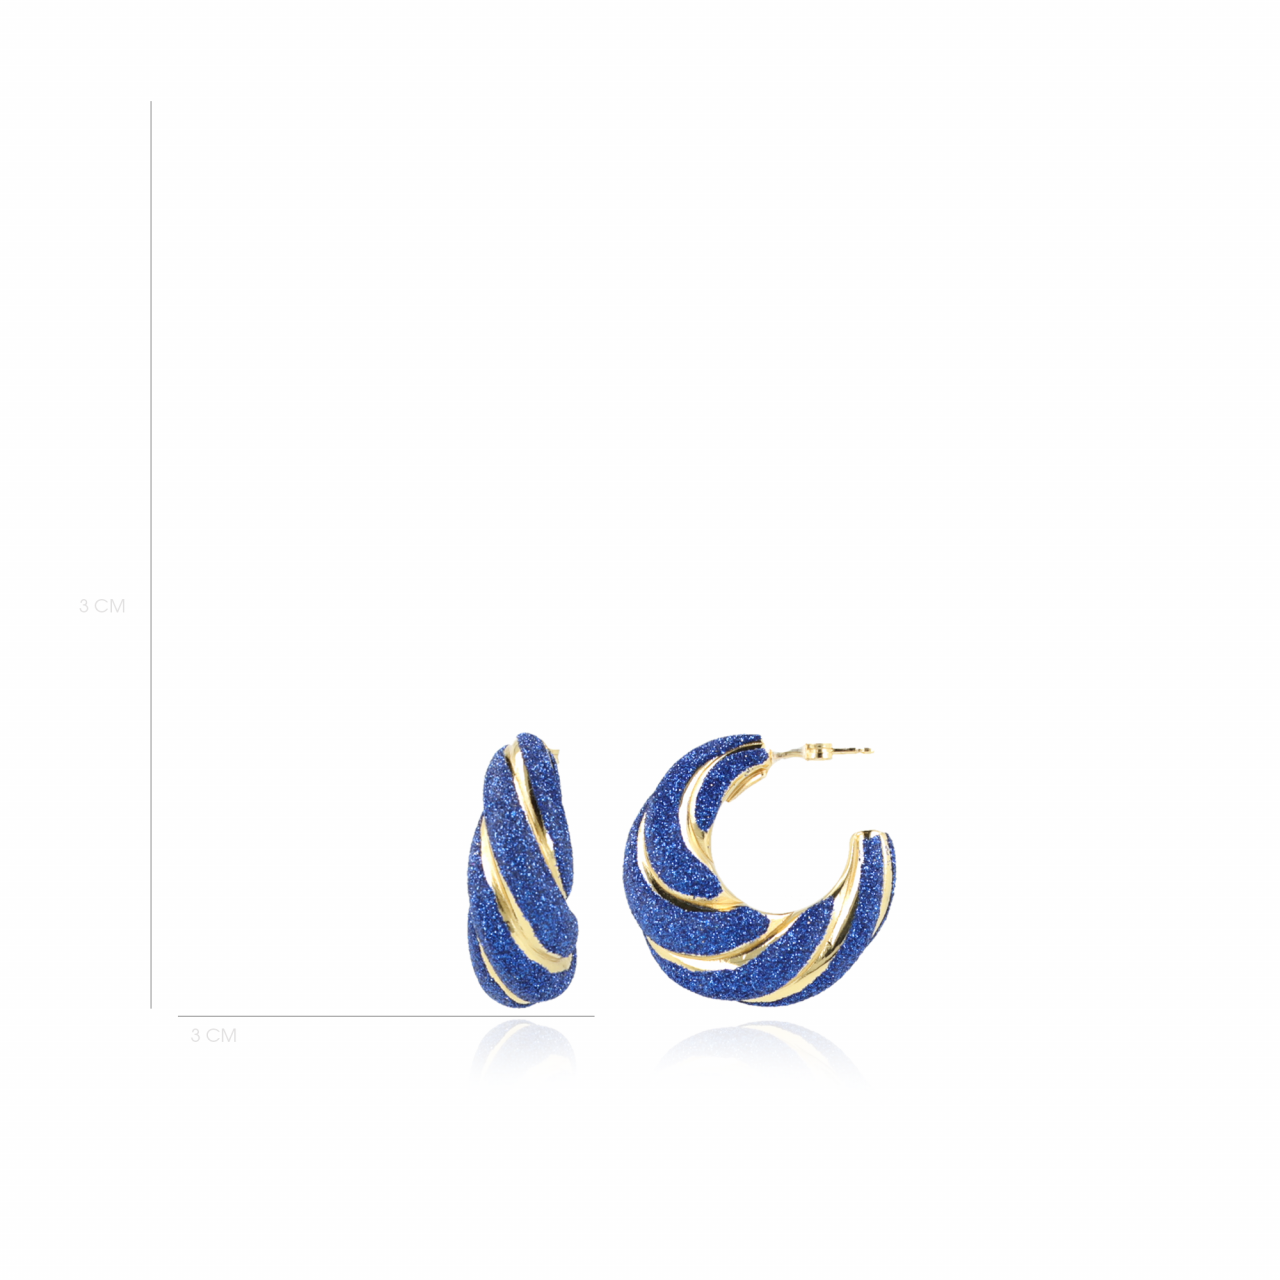 Blauwe Glitter oorbellen Twist Creole Slott-theme.productDescriptionPage.SEO.byTheBrand